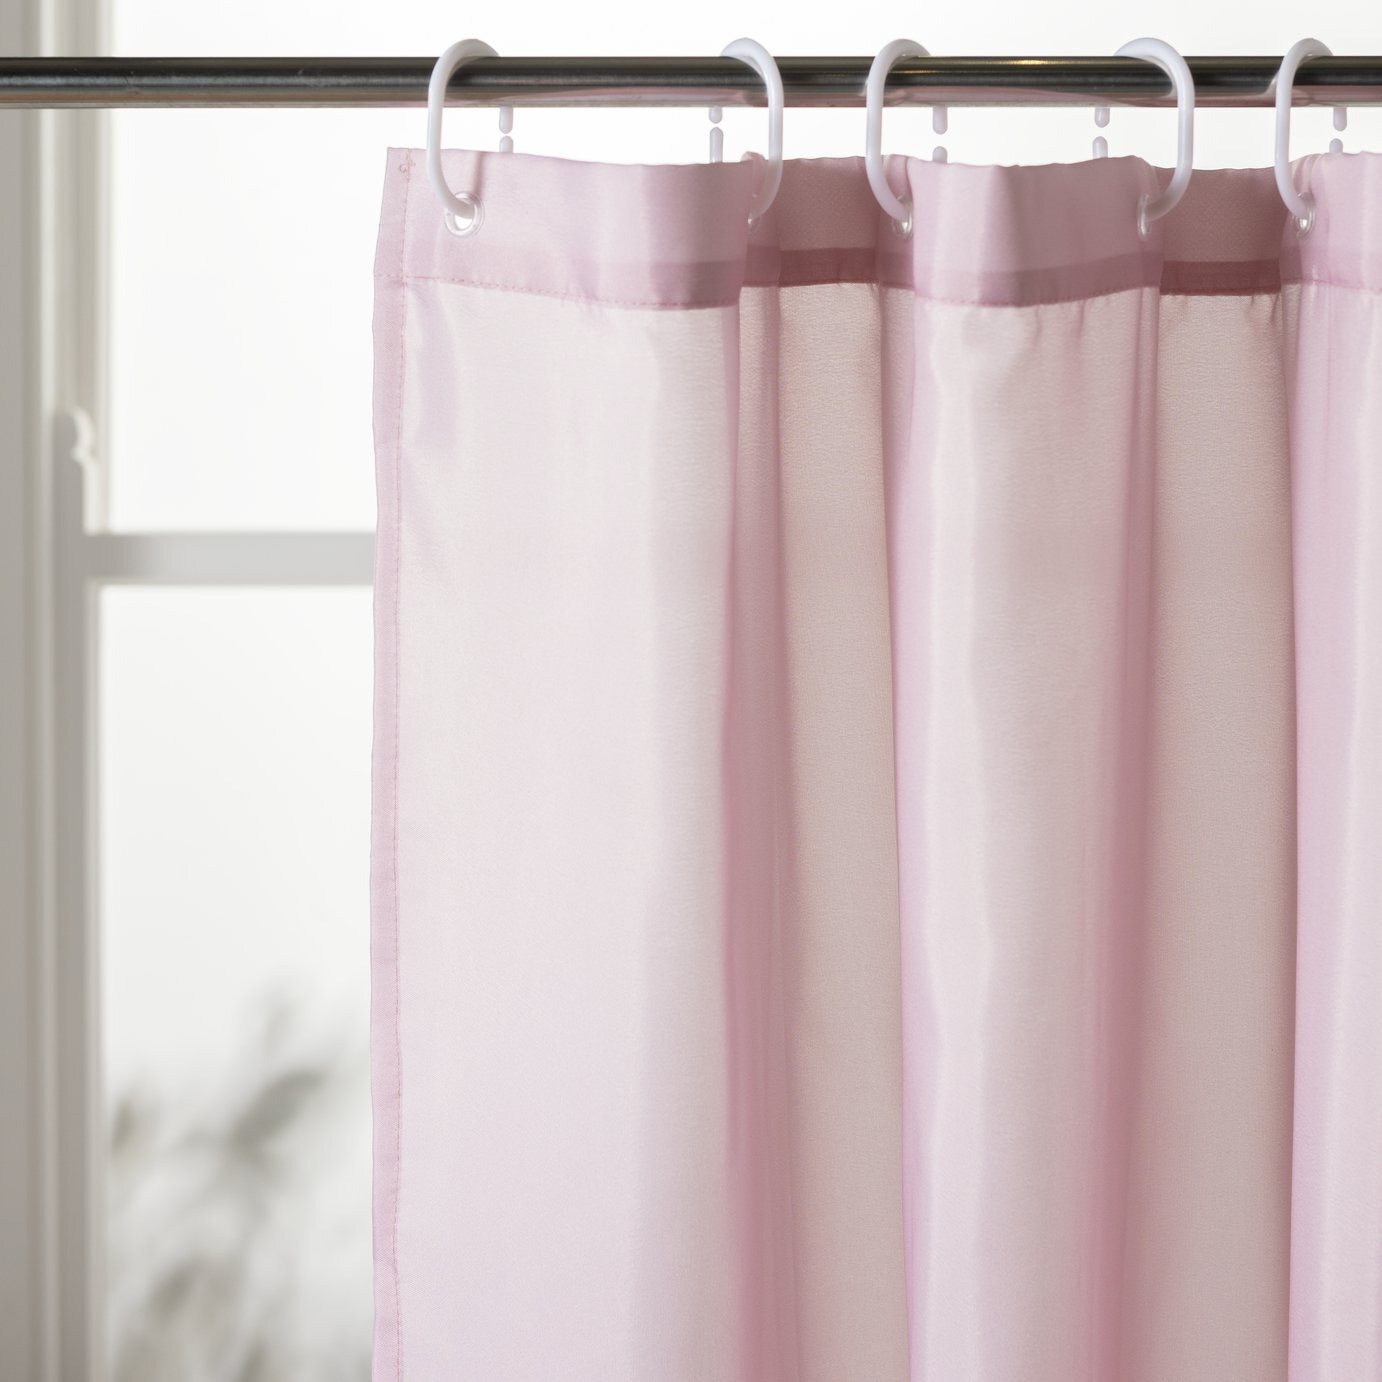 Argos Home Shower Curtain - Pink - image 1